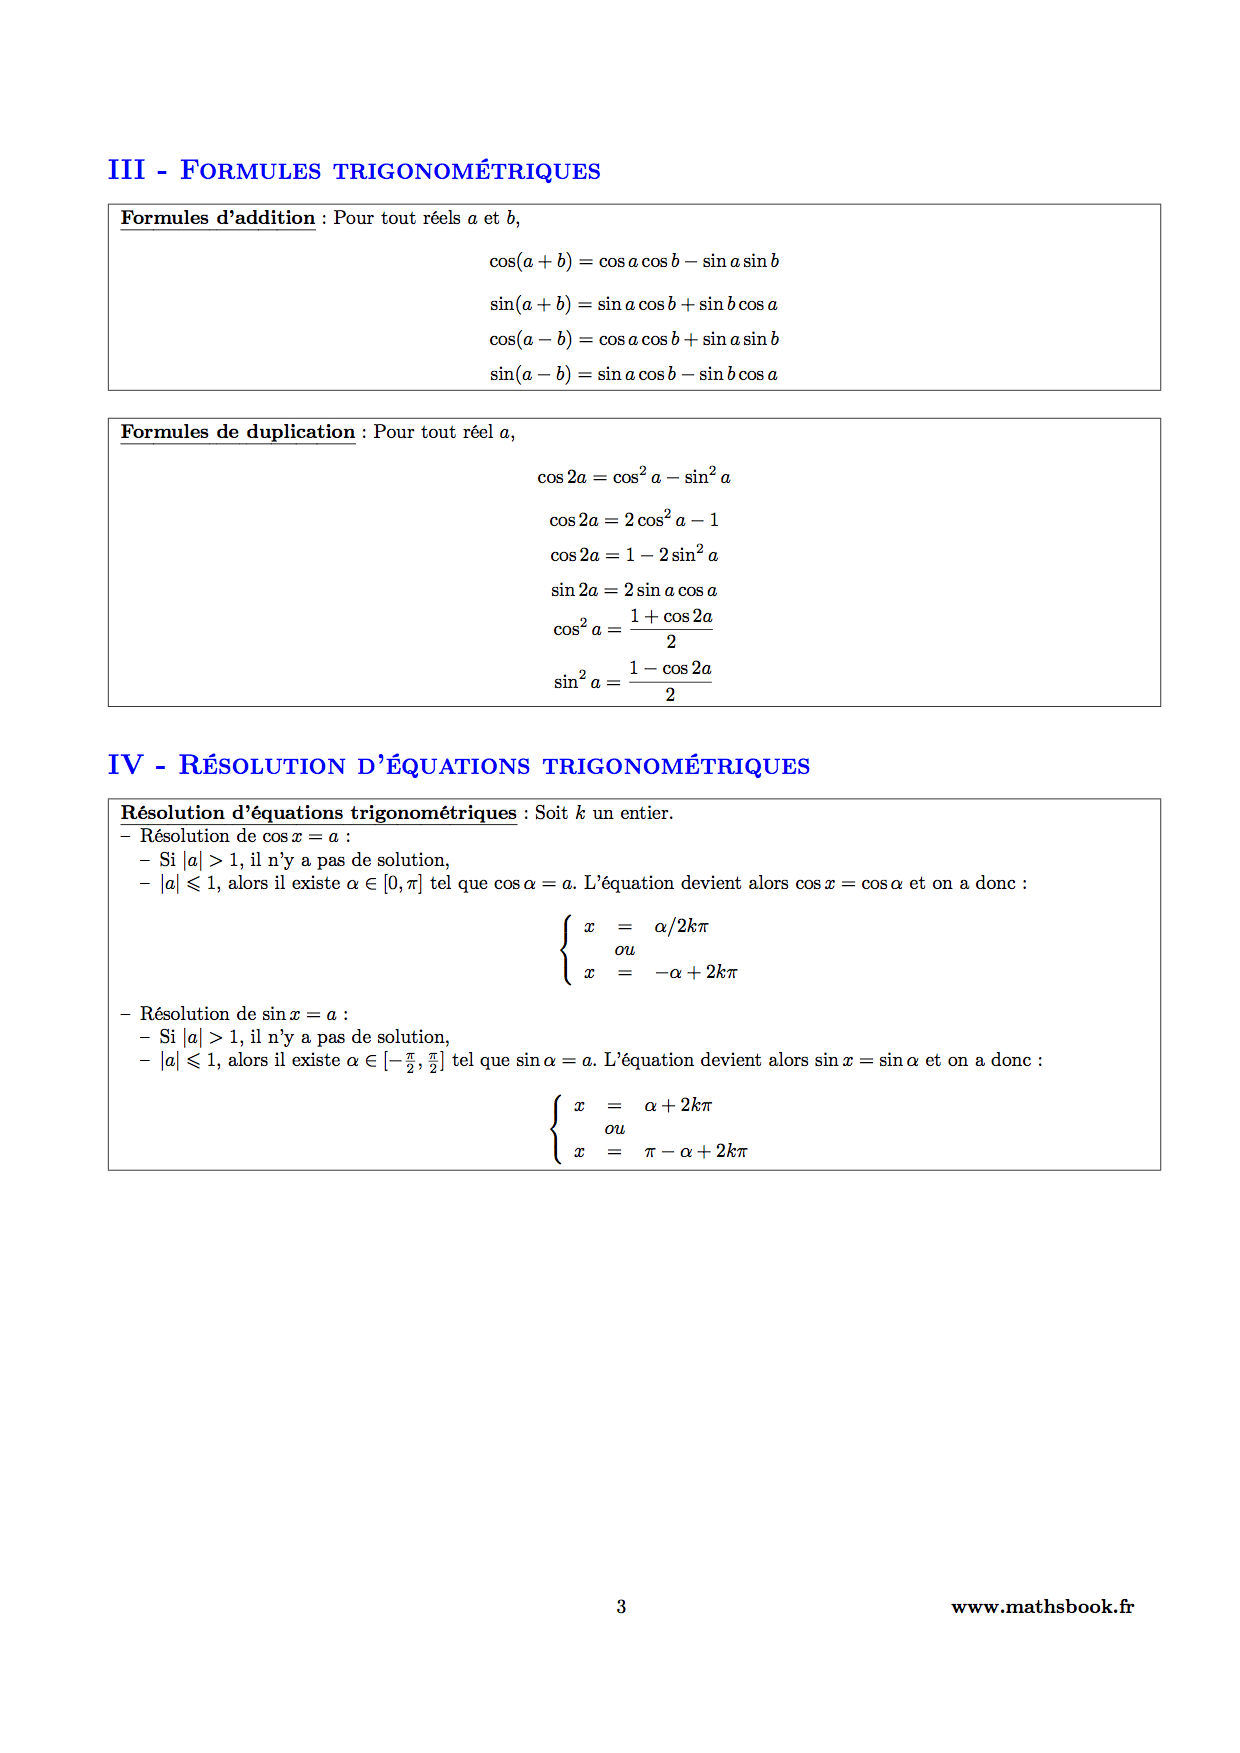 formules trigonometriques resolution equations